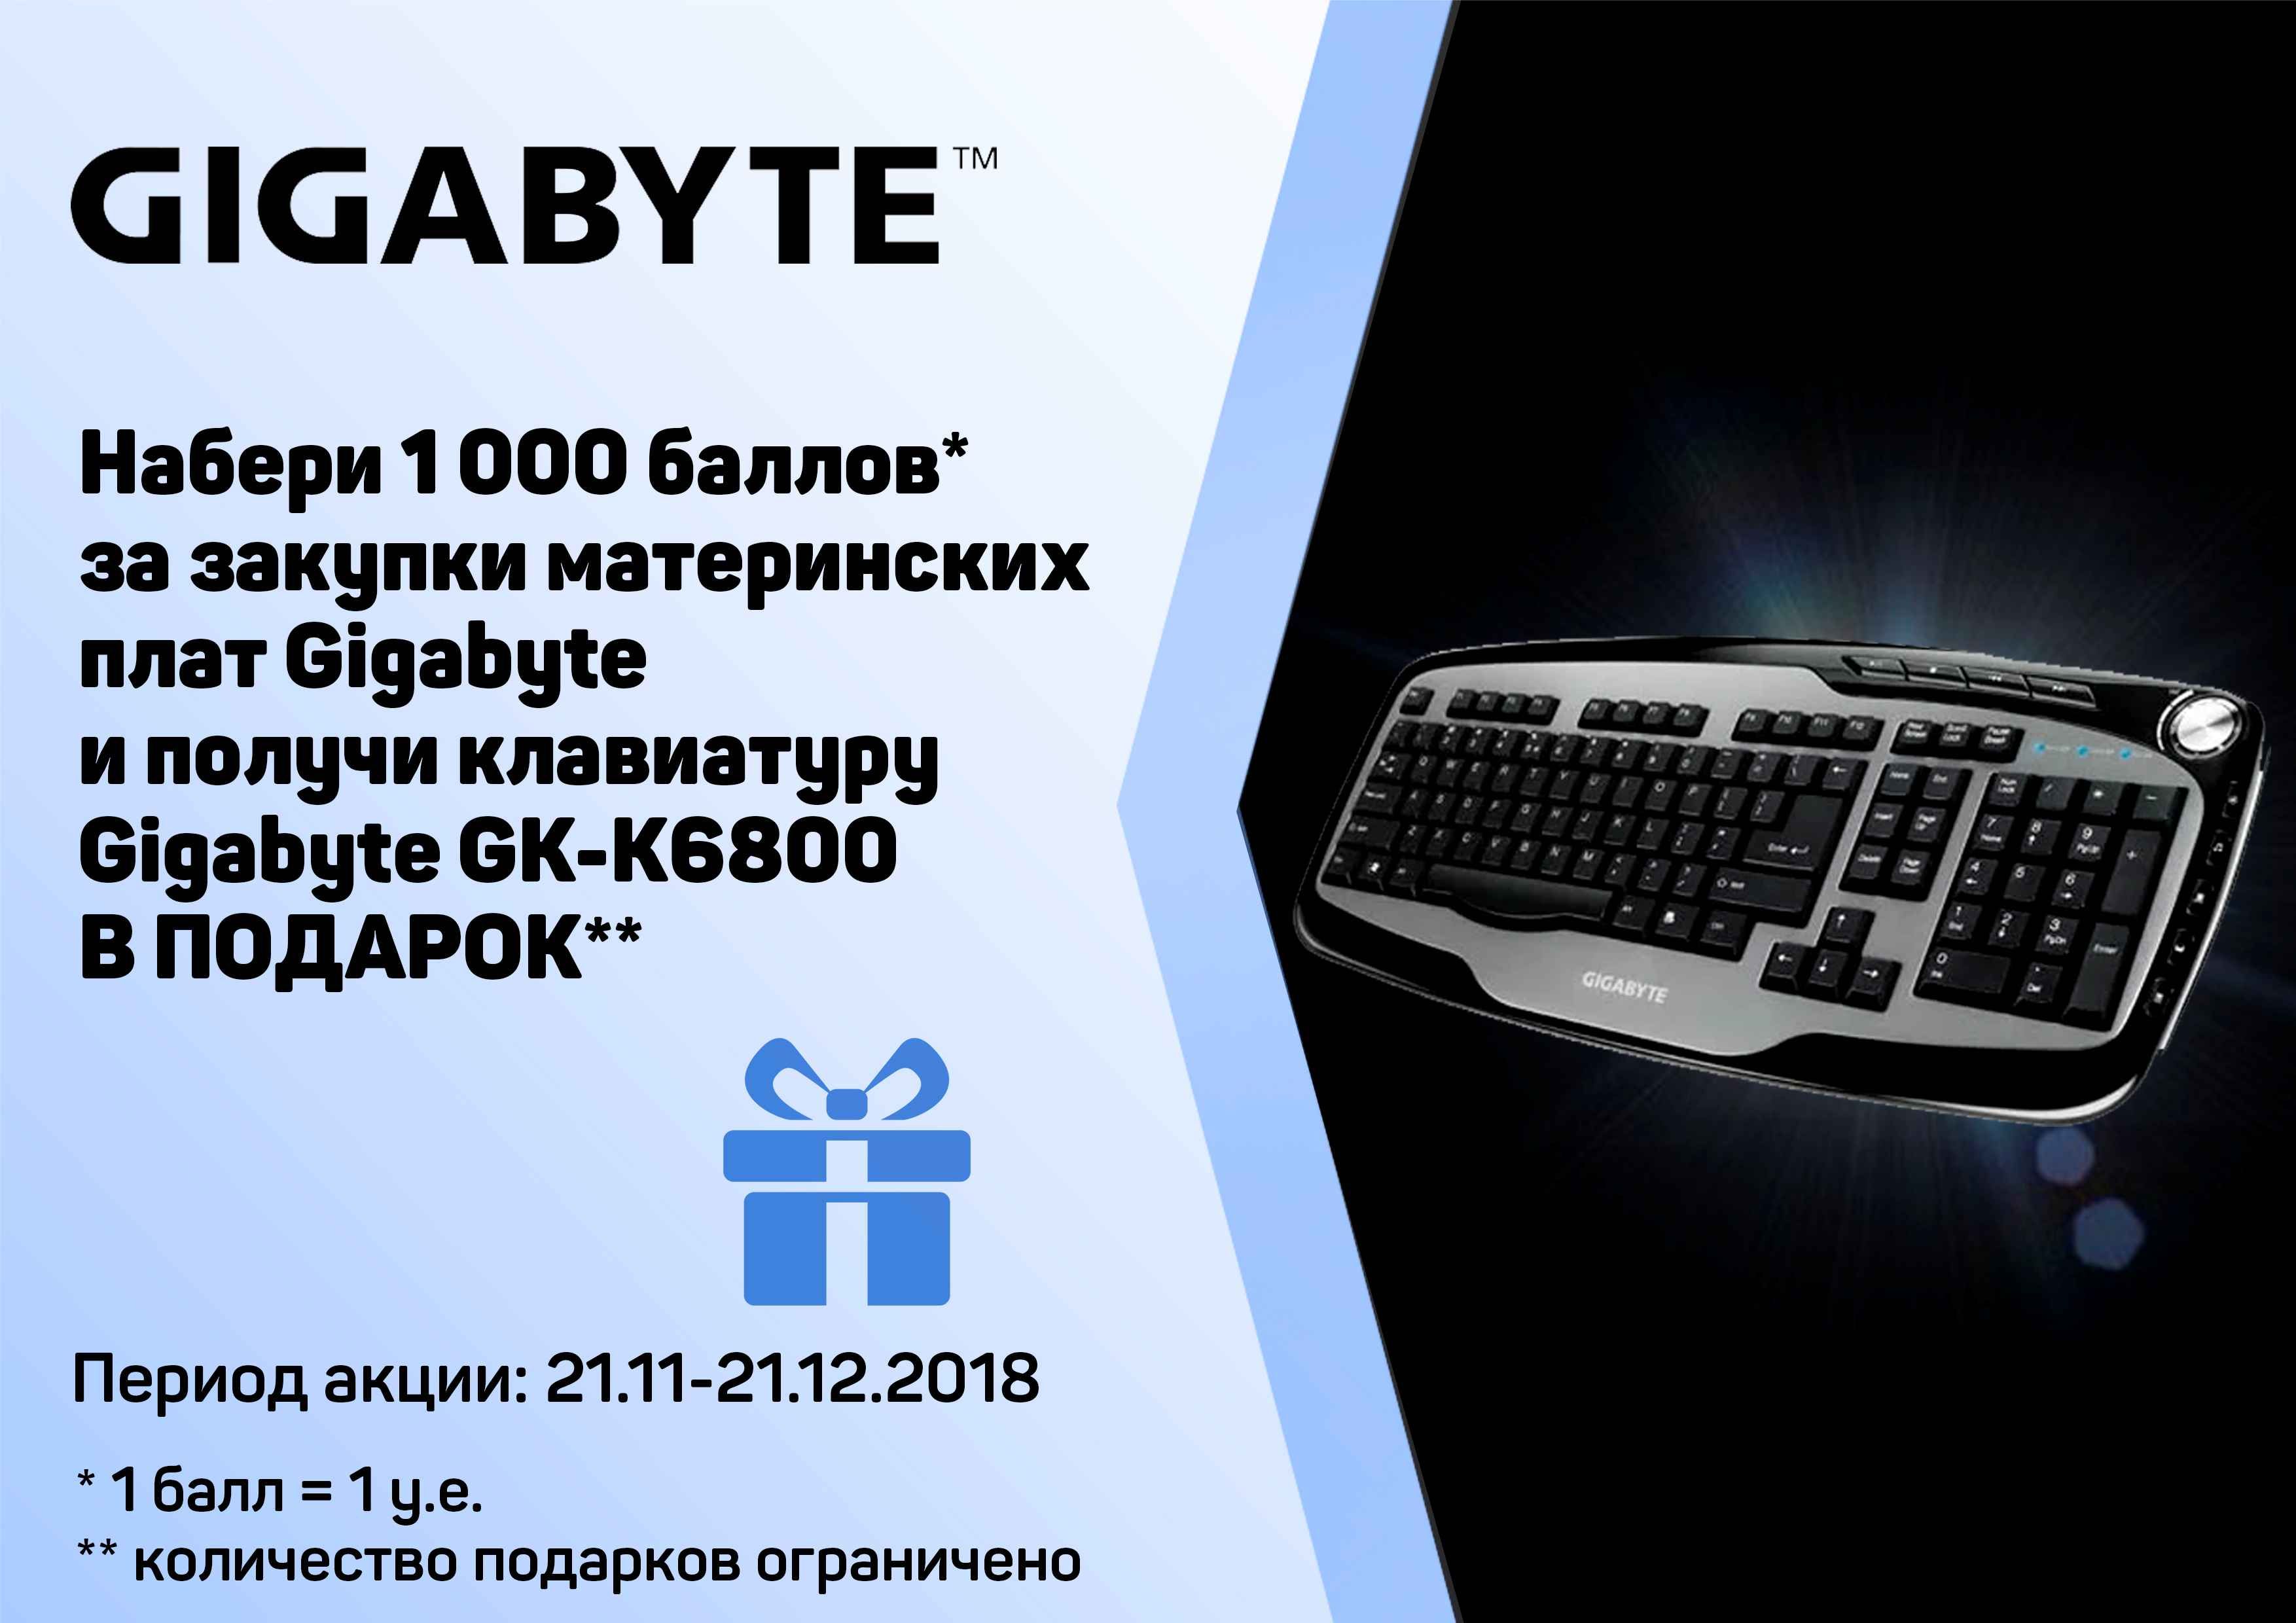 Клавиатура Gigabyte в подарок за материнские платы Gigabyte